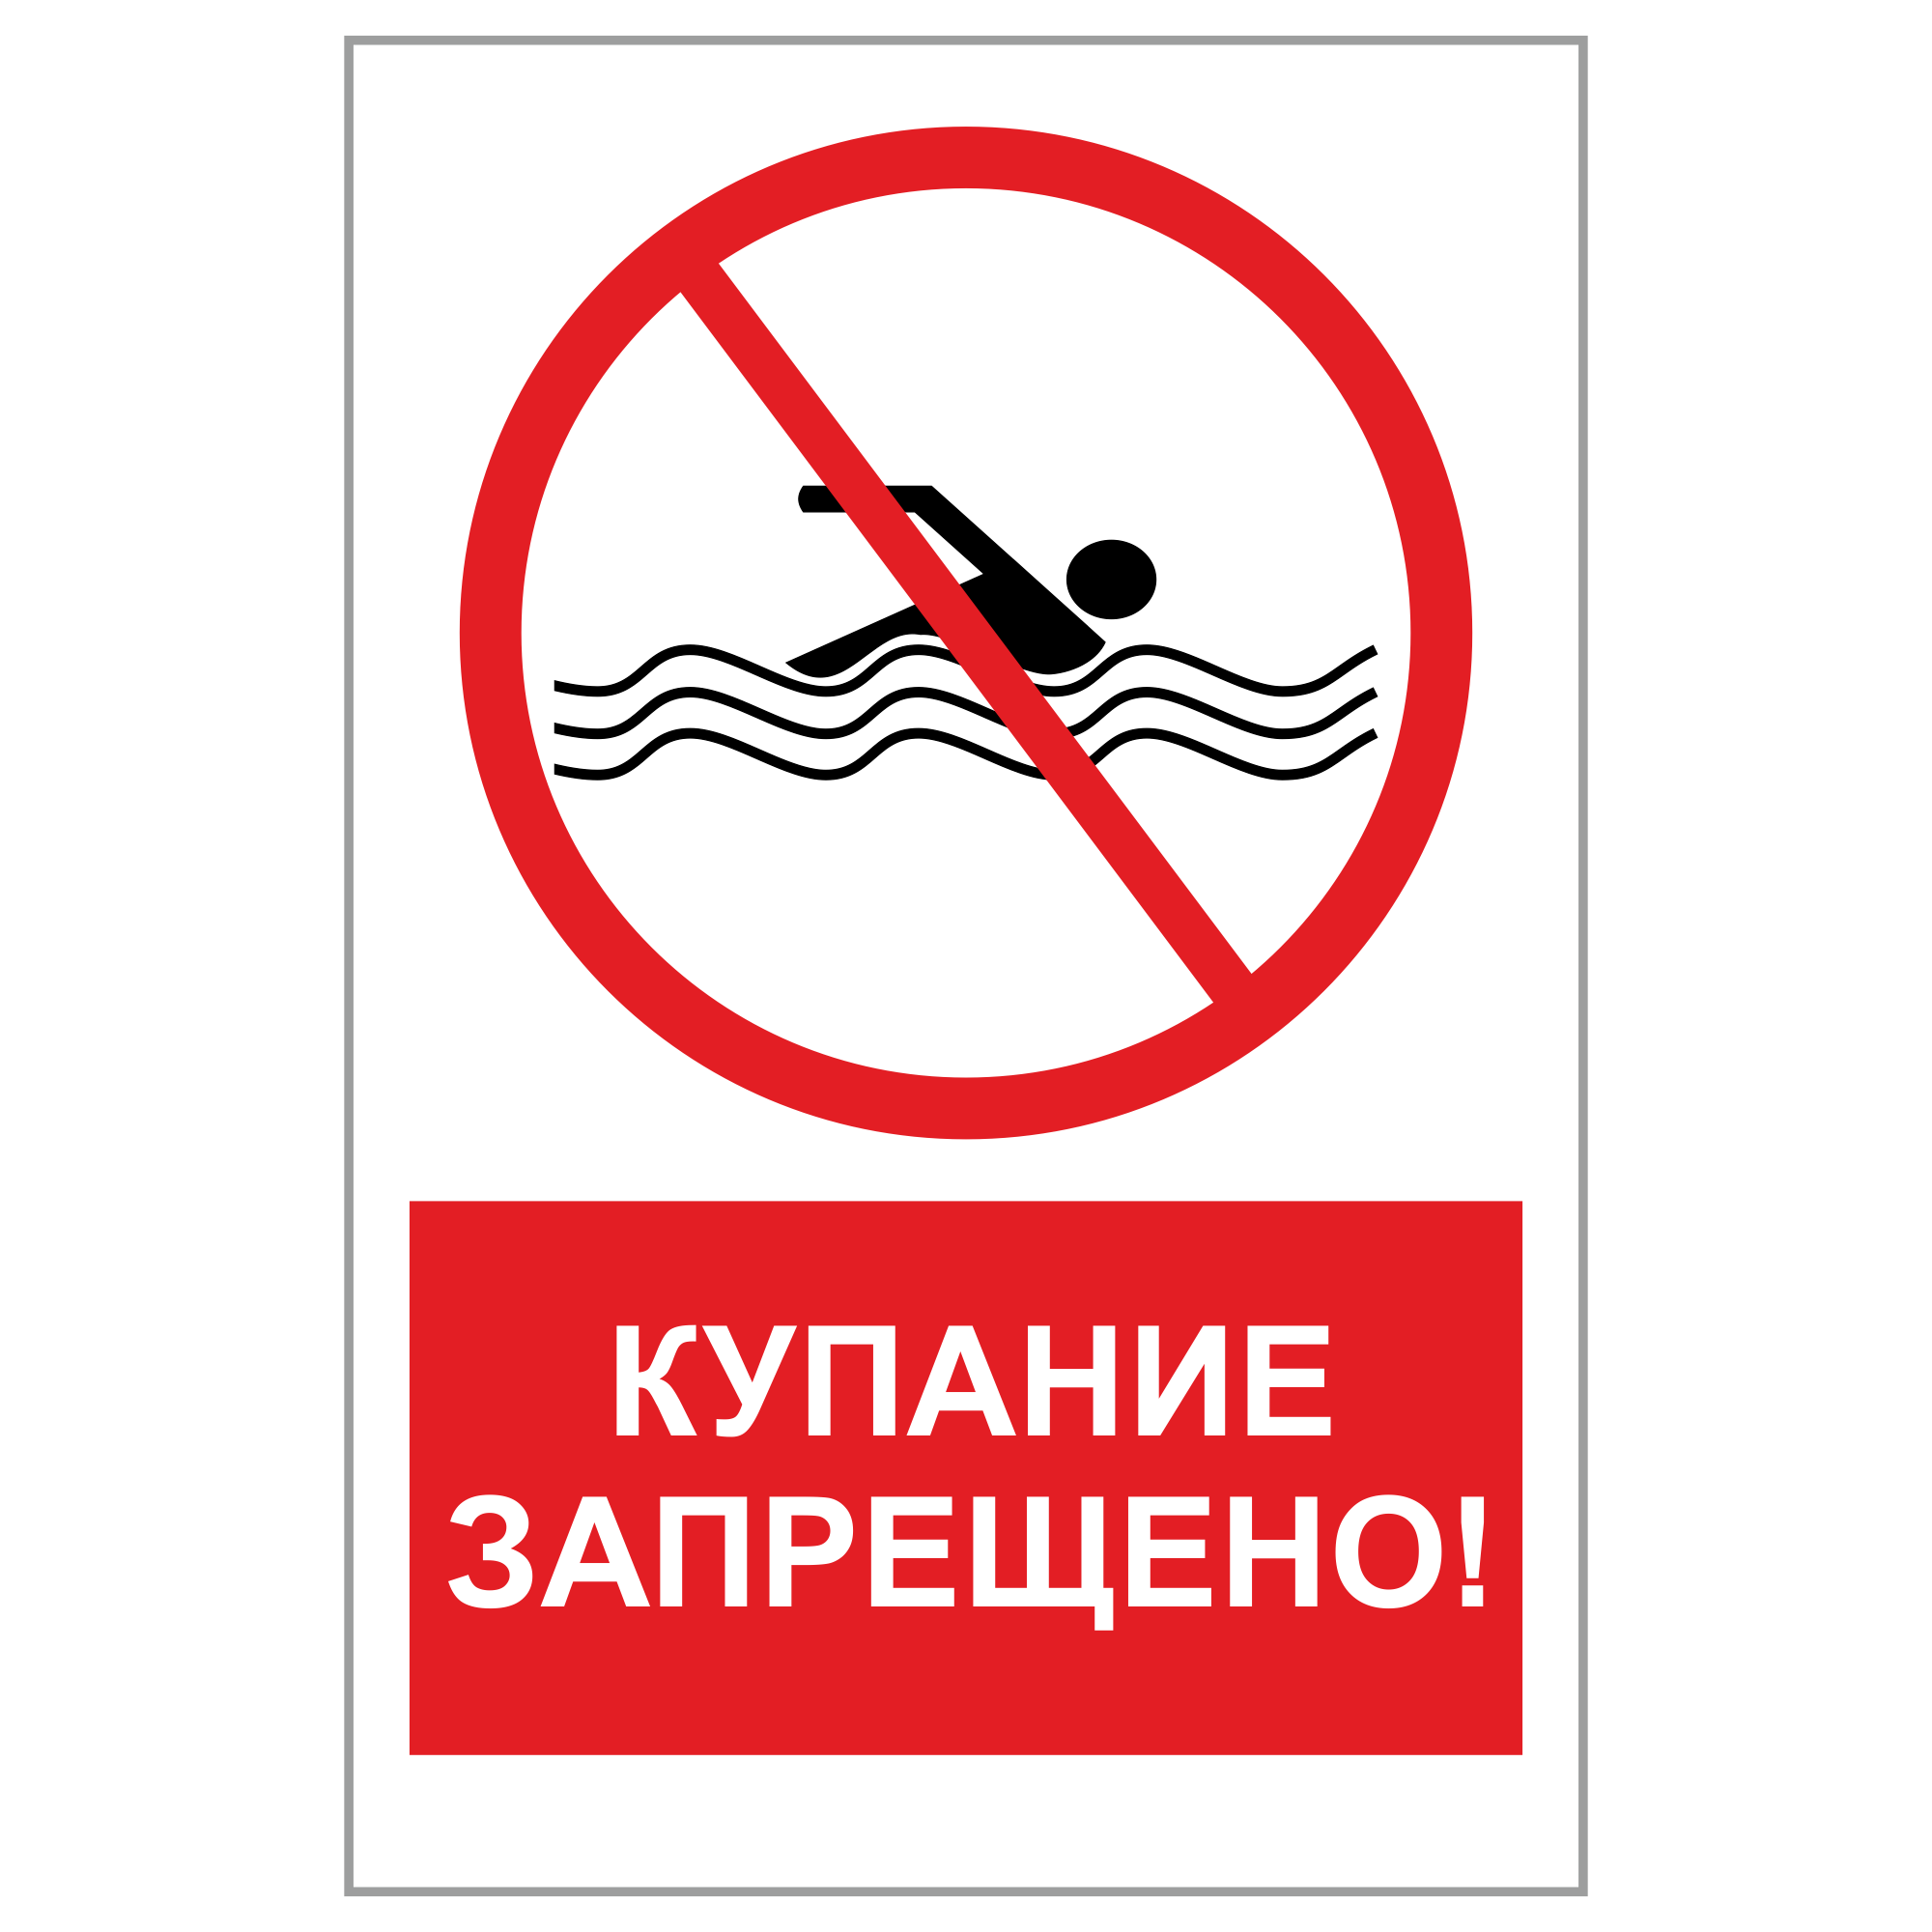 Купаться запрещено картинки. Знак «купаться запрещено». Купание запрещено табличка. Знаккураться запрещено. Таблички о запрете купания.